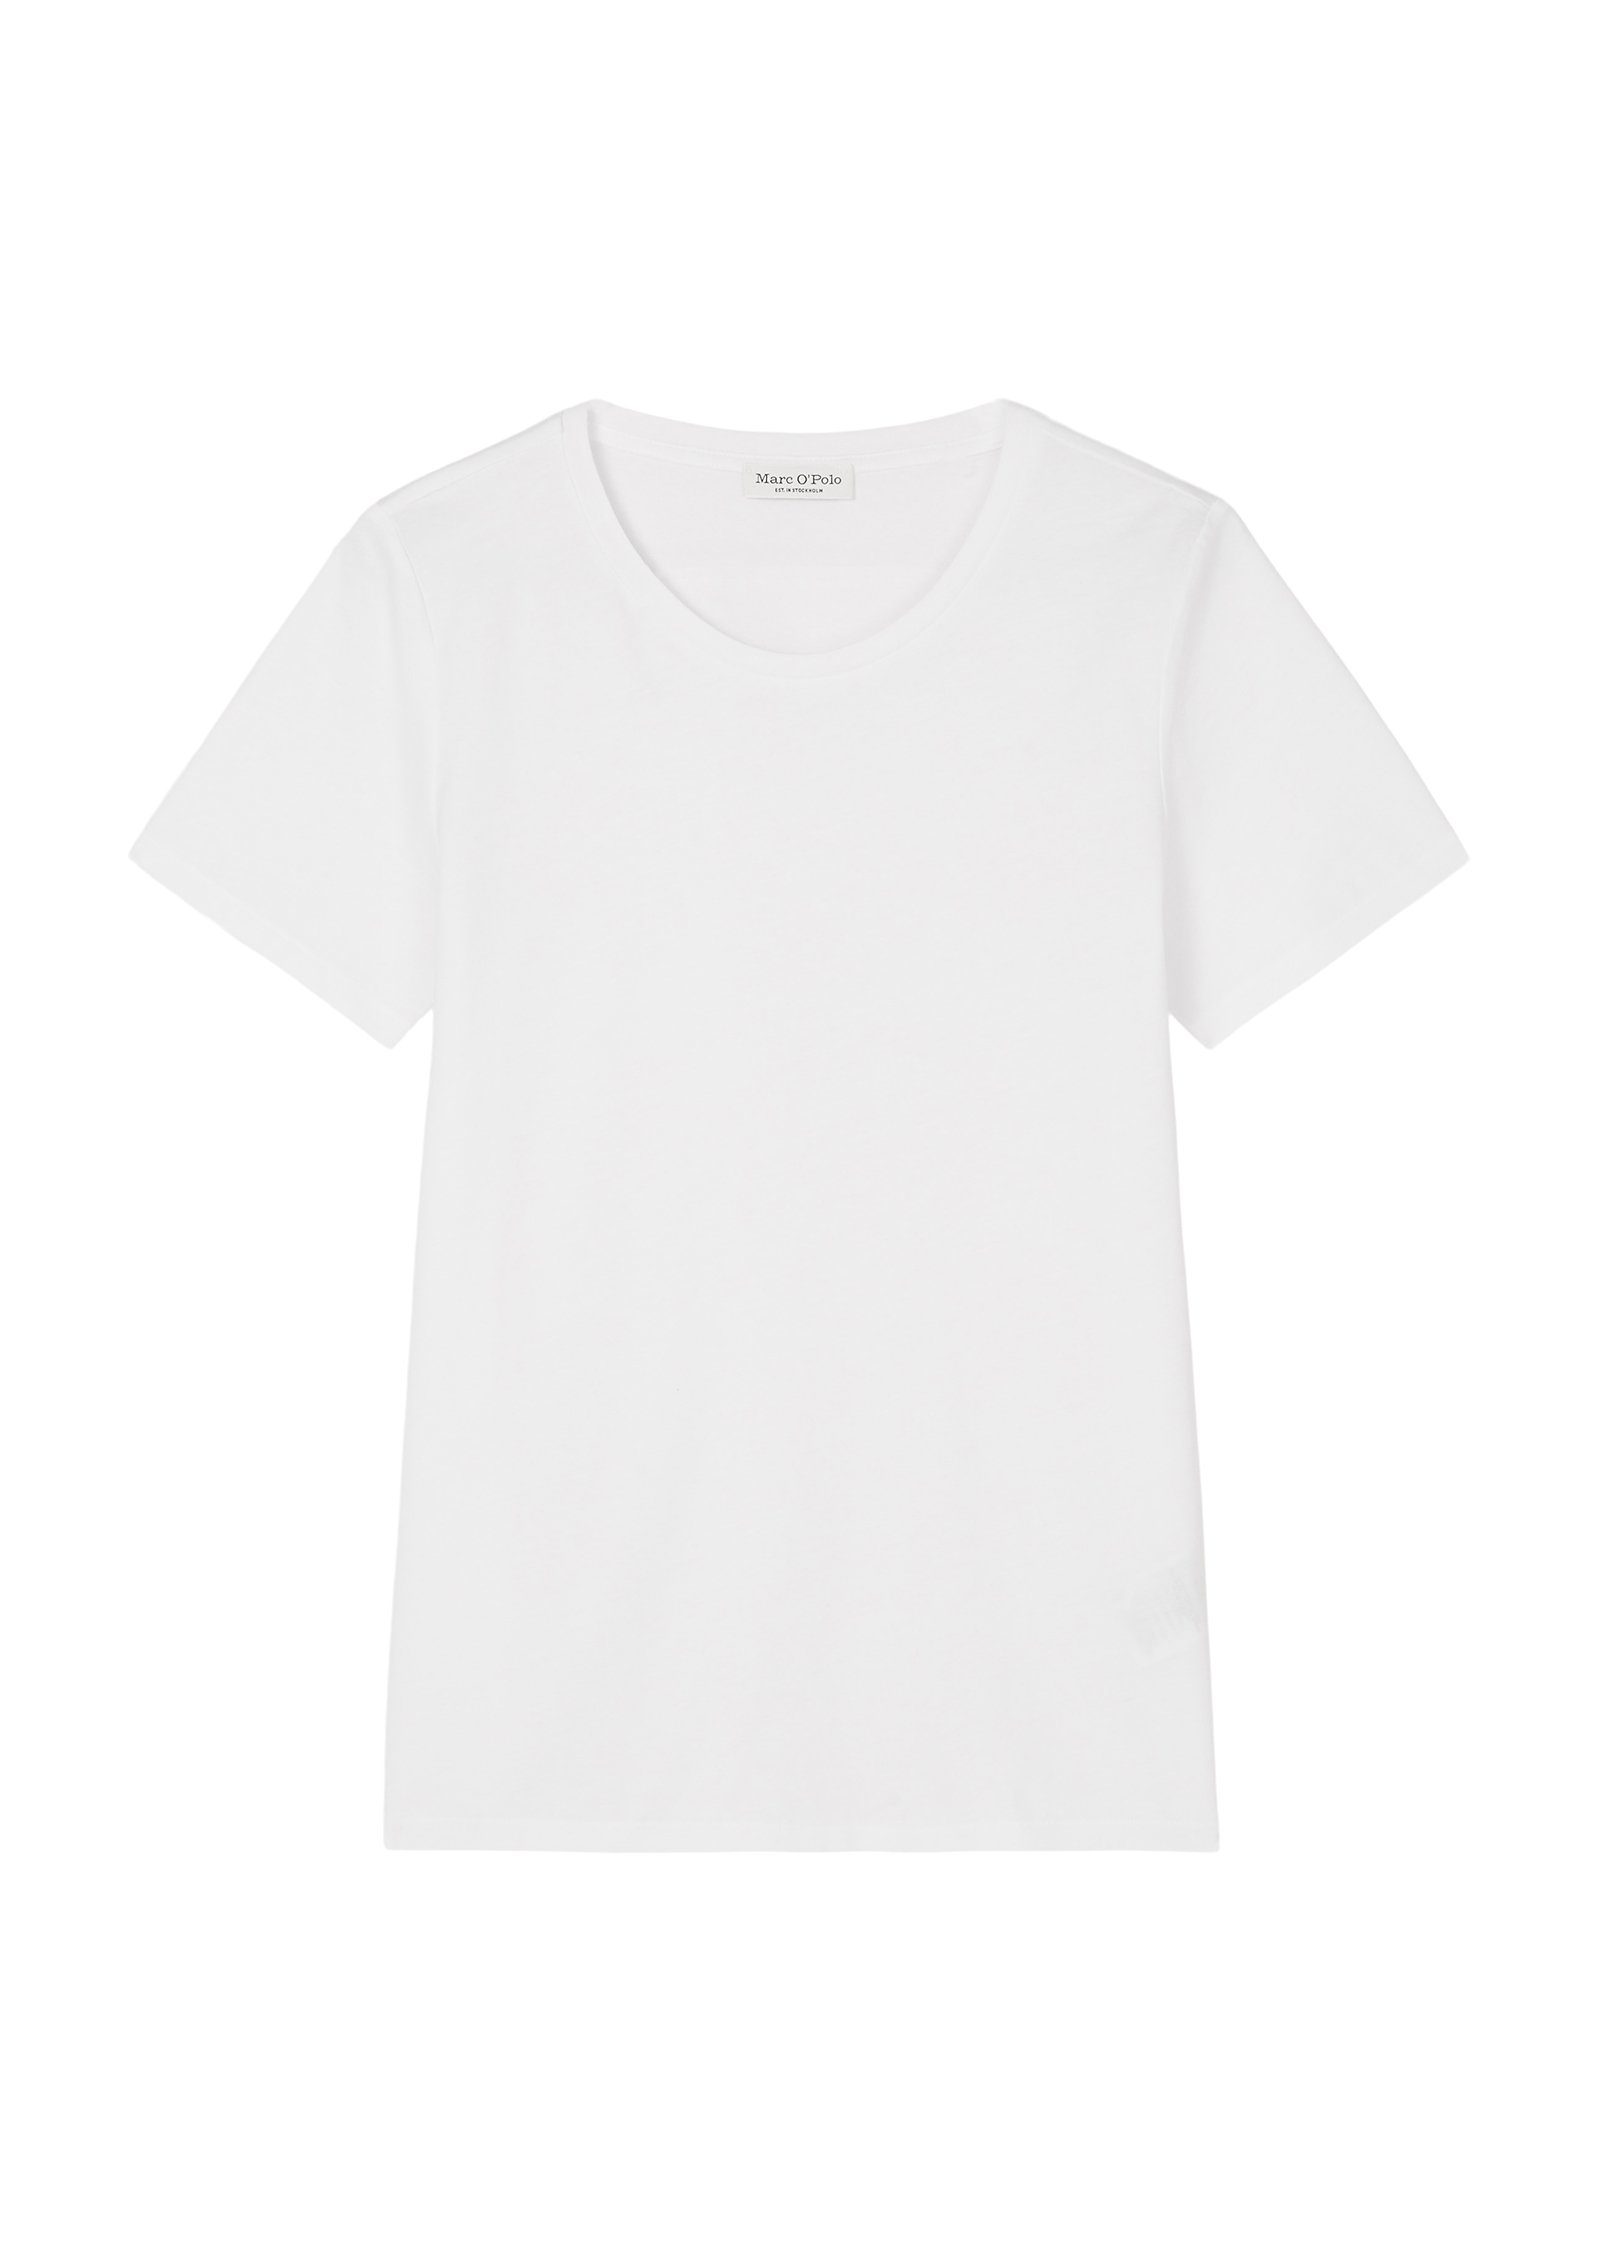 O'Polo T-Shirt Marc sleeve, round neck short T-shirt, white